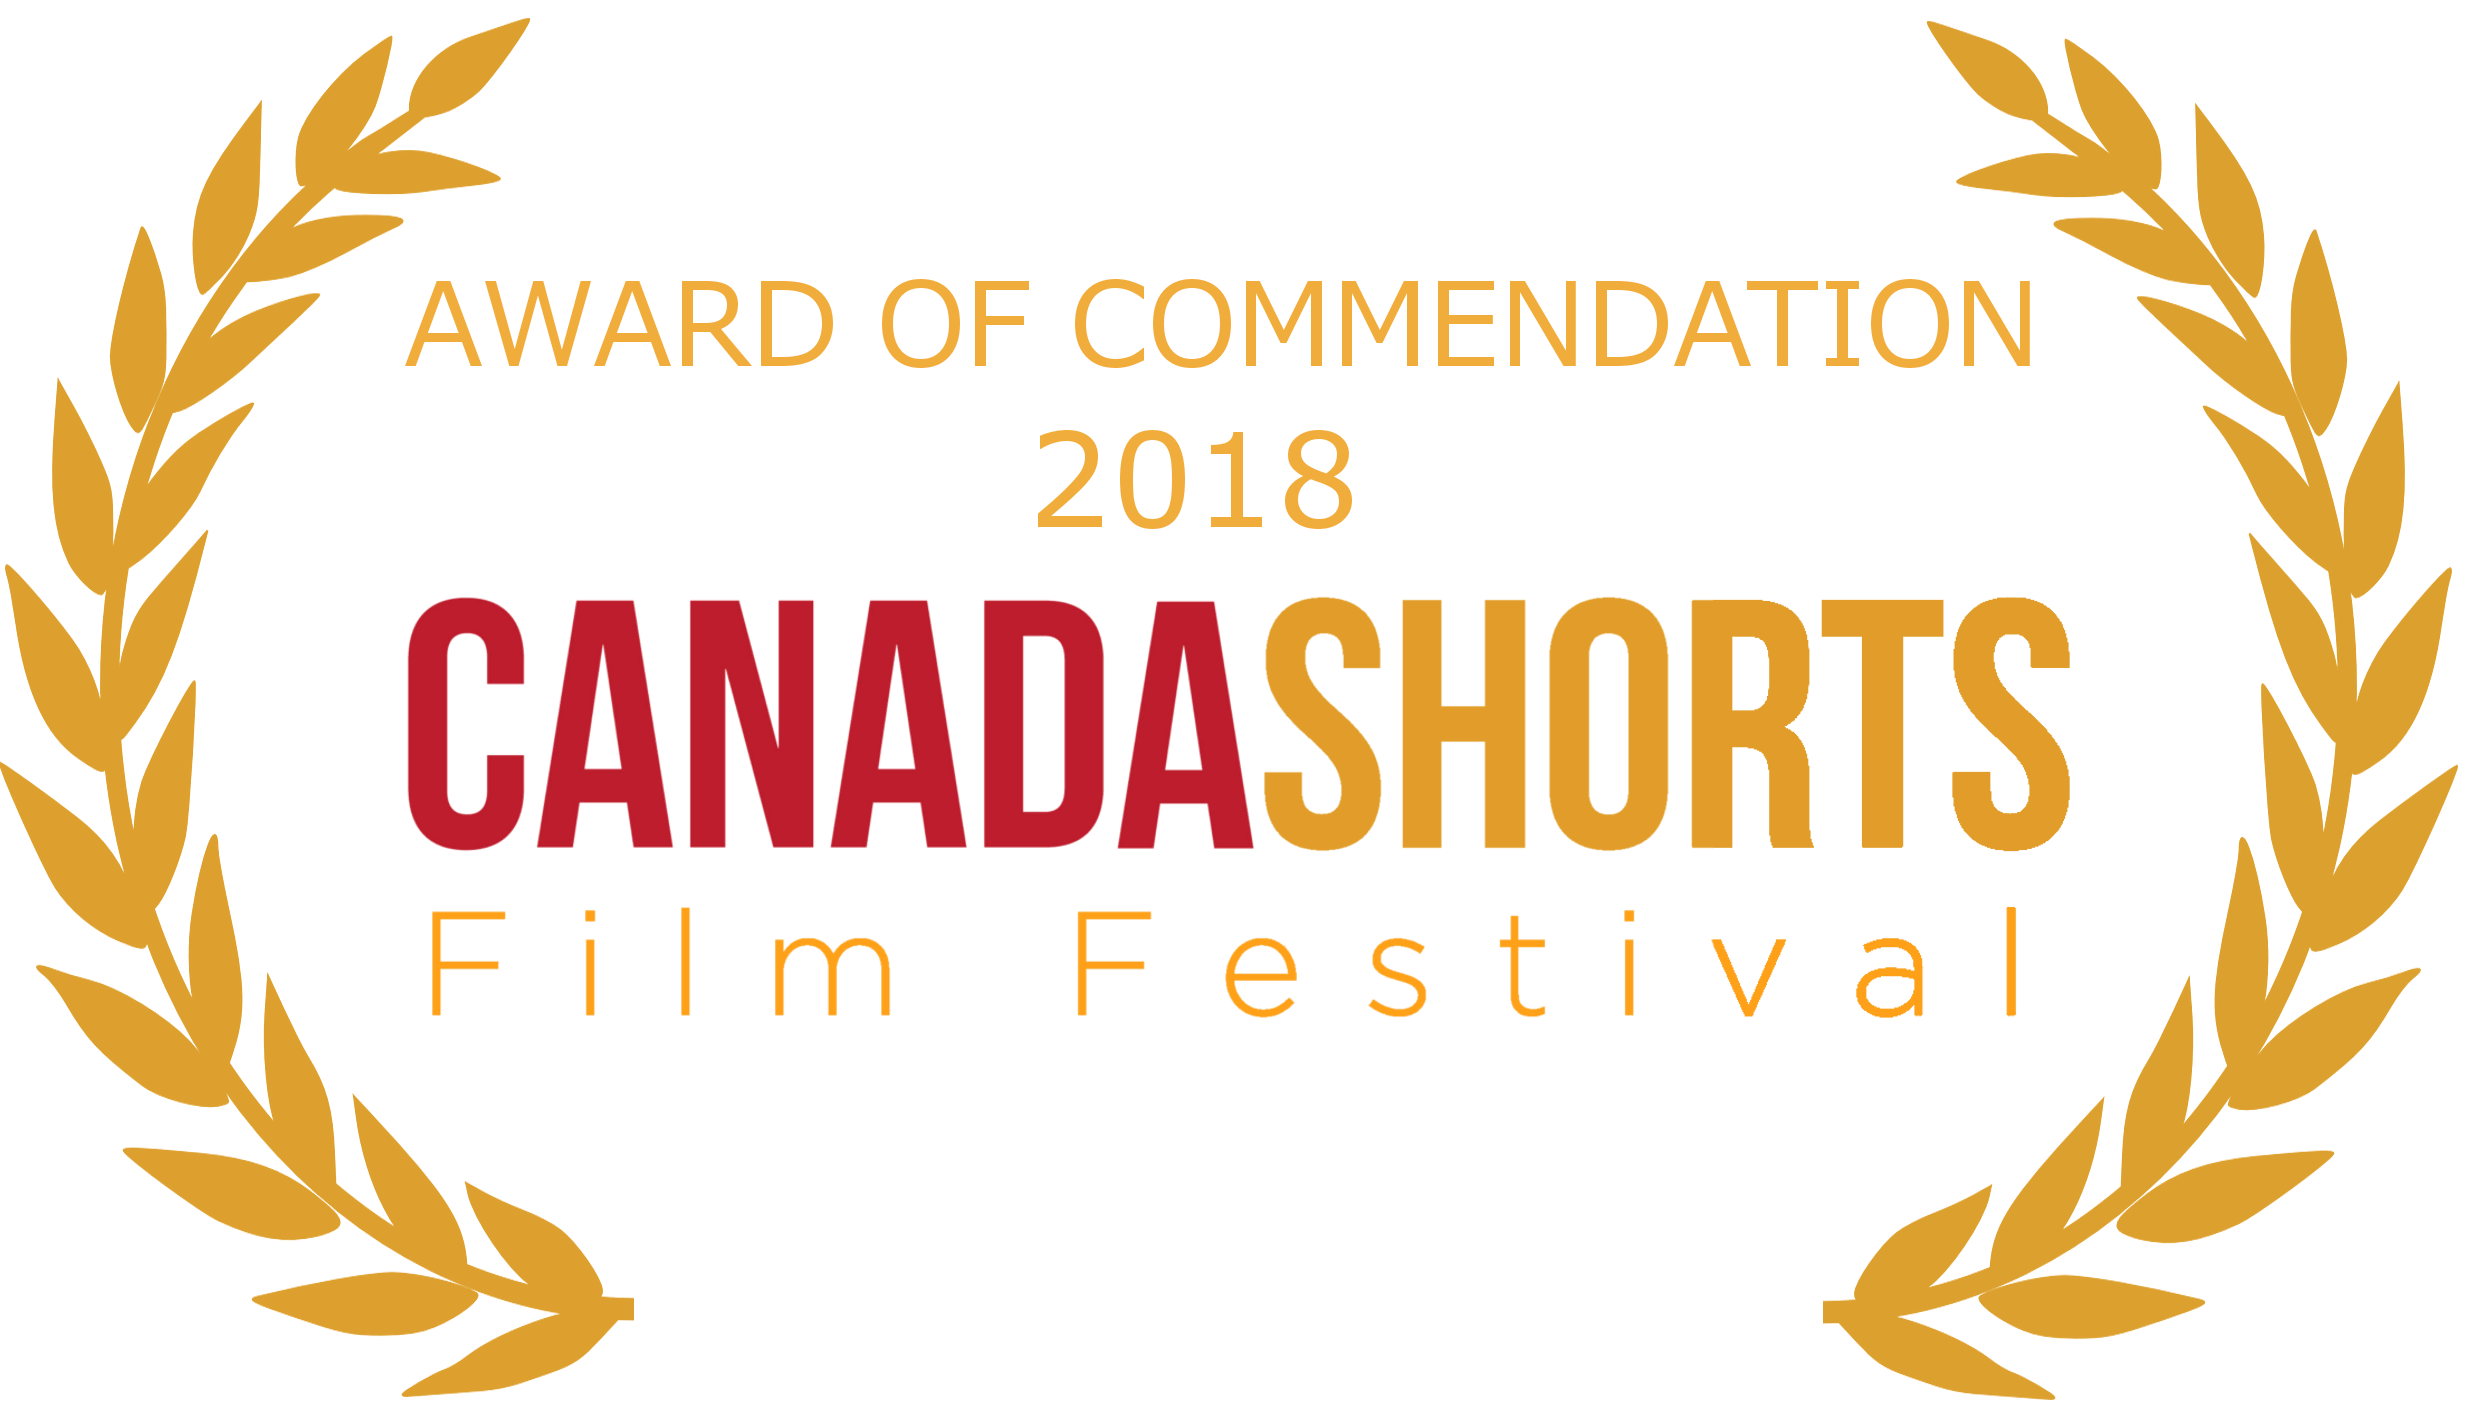 Kathryn Ann Jankowski's Award of Commendation from Canada Shorts Film Festival 2018